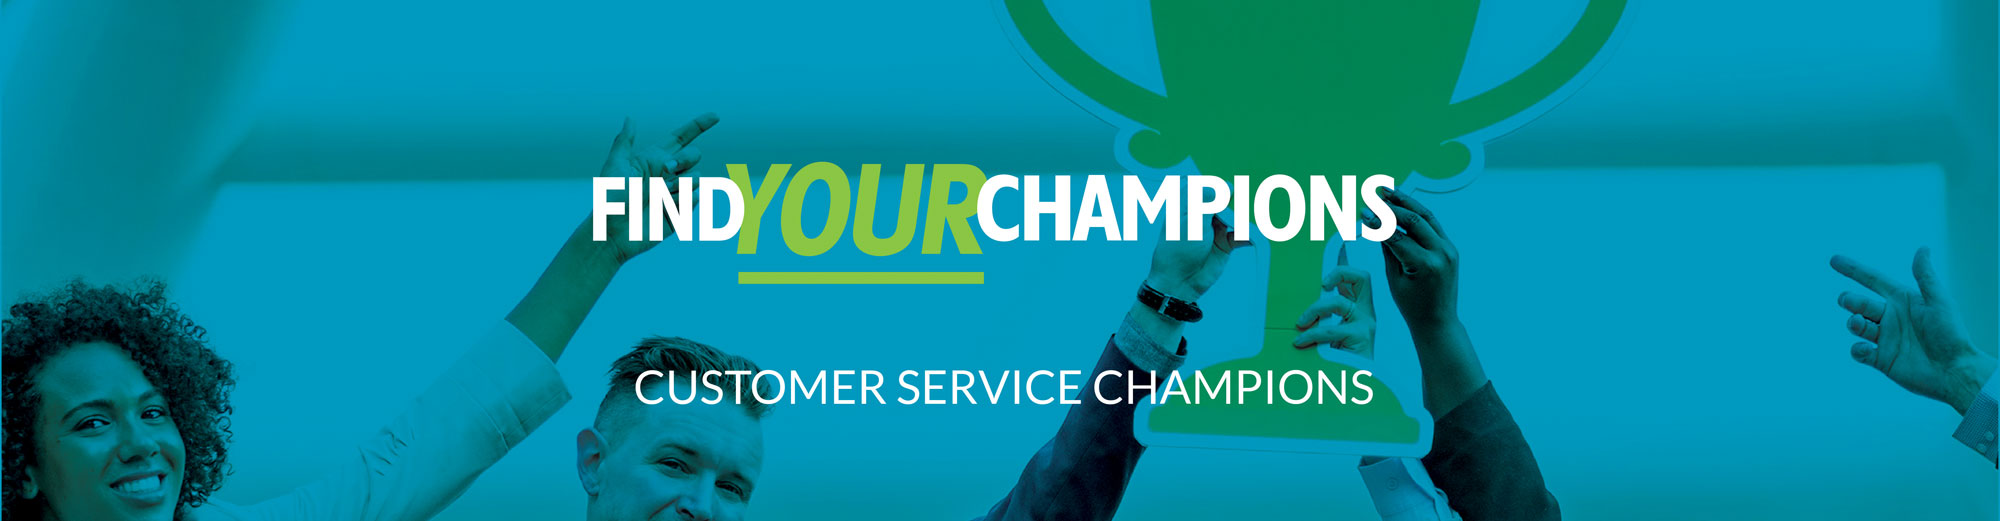 Customer Service Champions